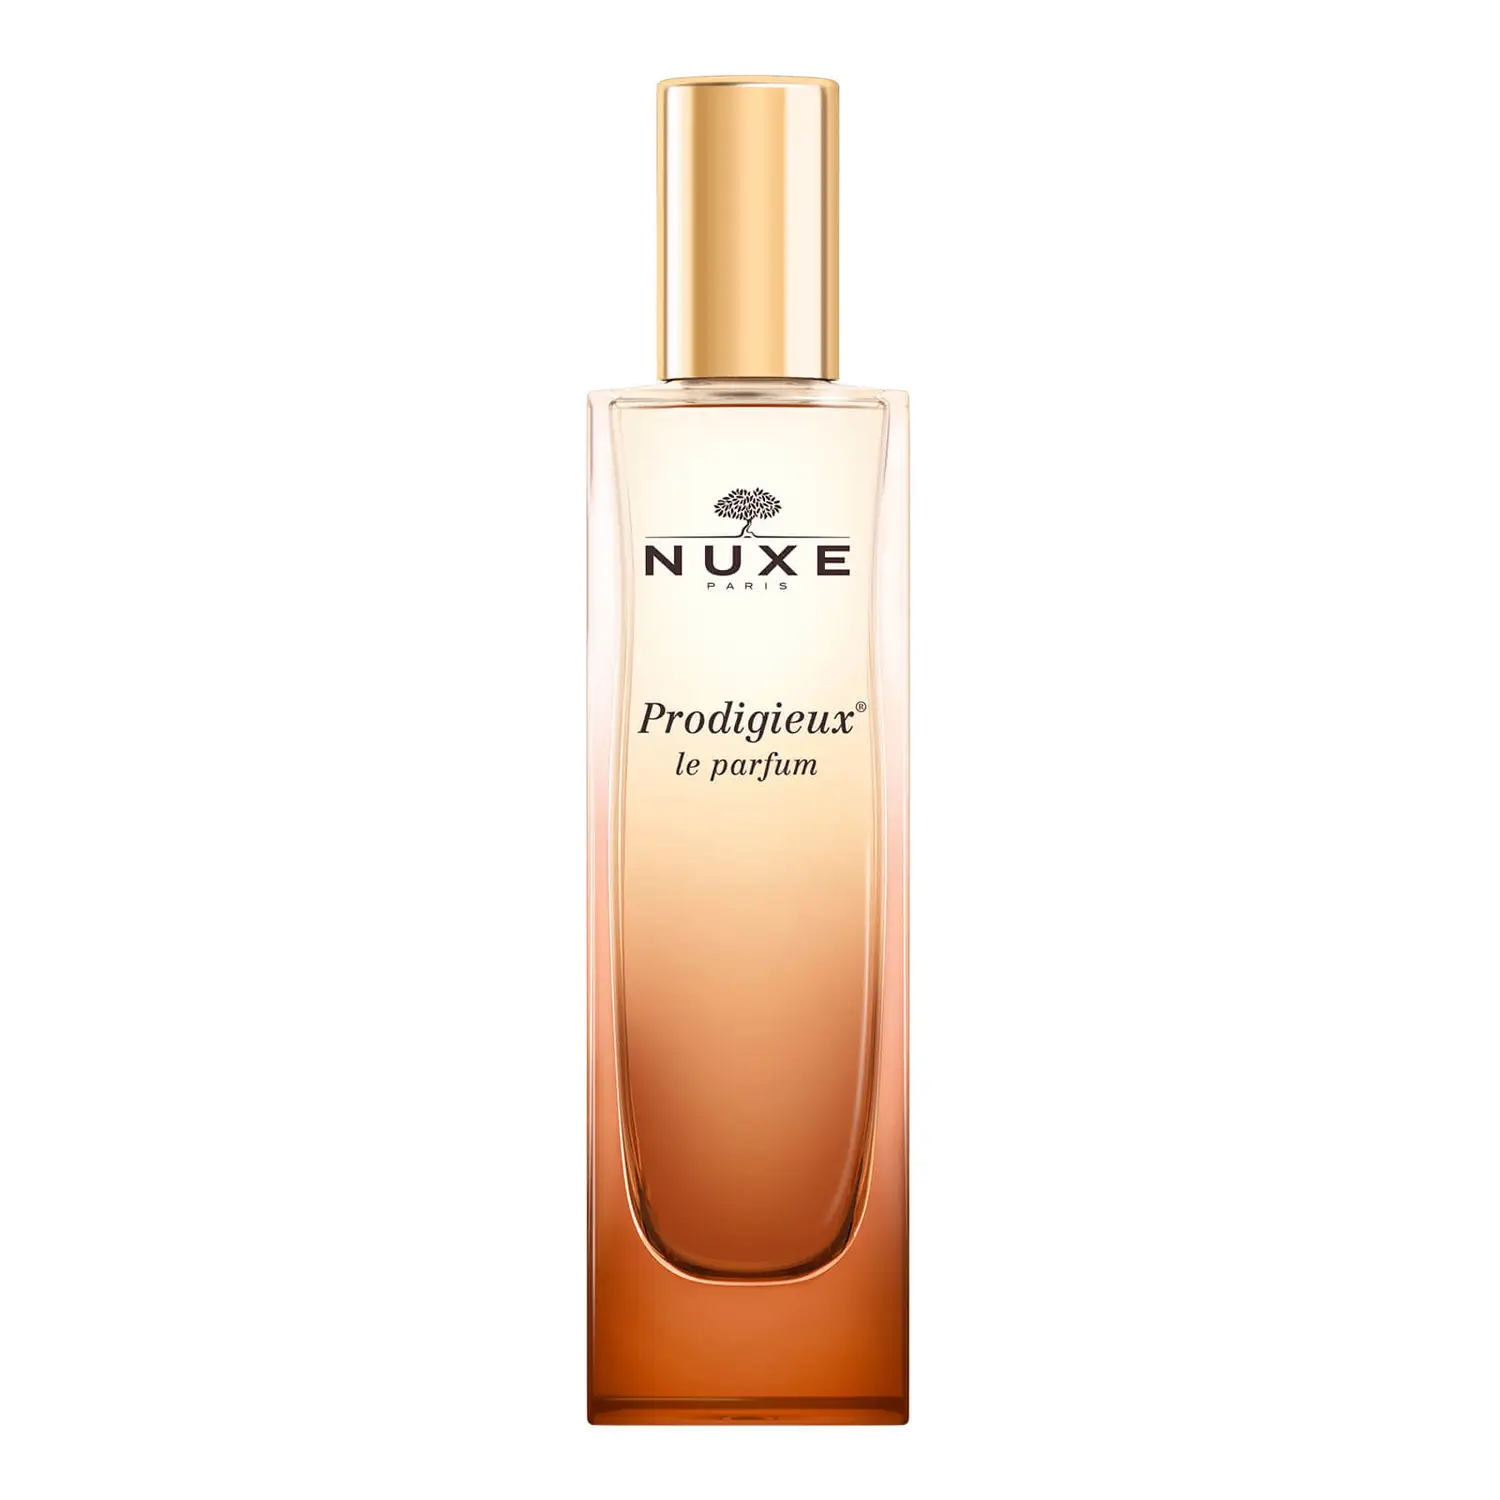 Apa de parfum Prodigieux, 50ml, NUXE